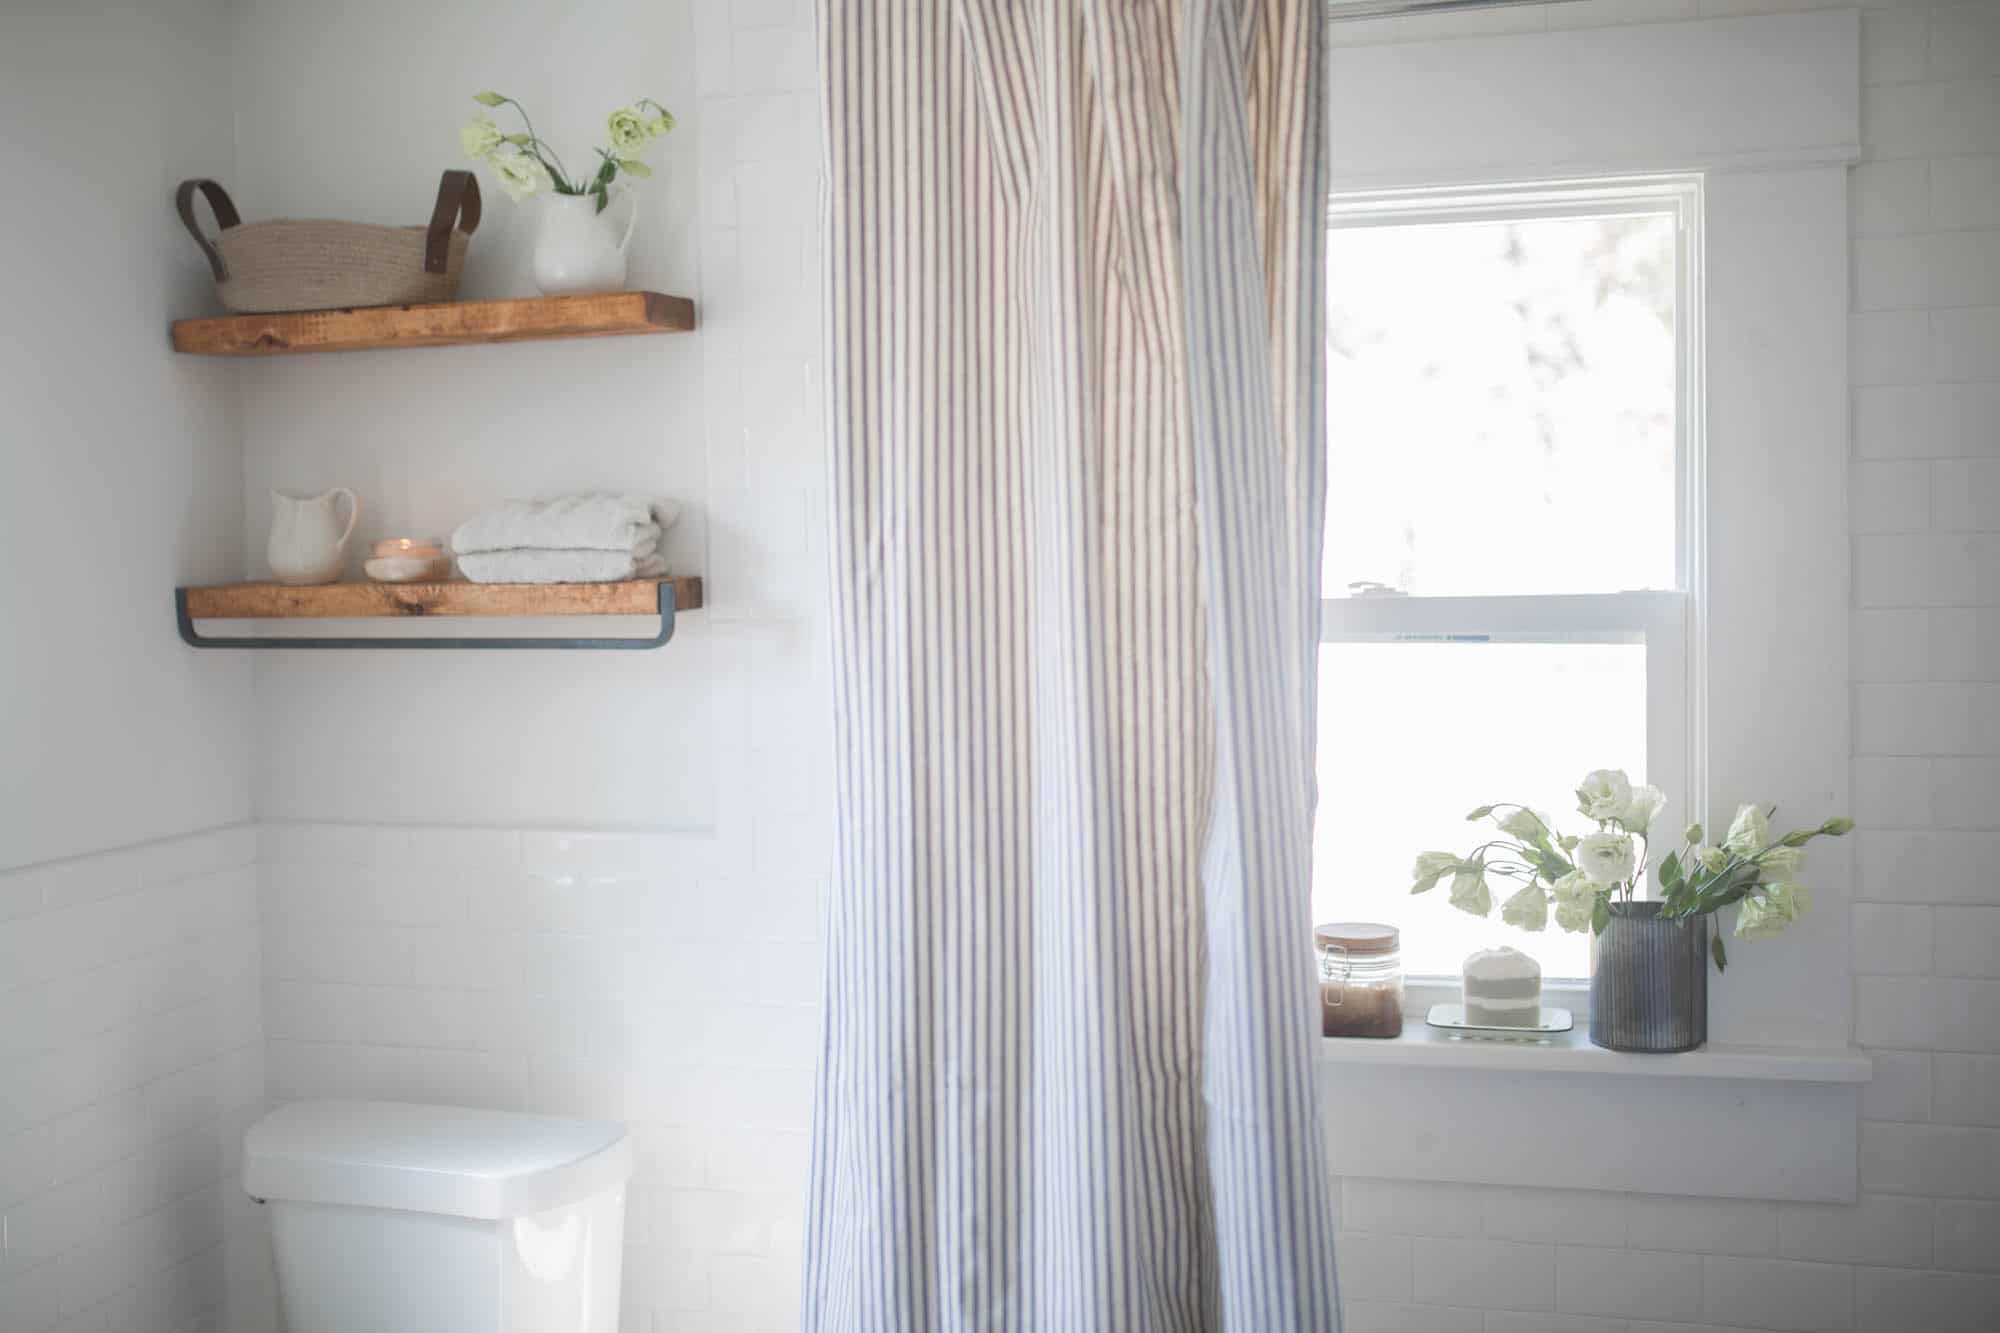 Farmhouse Bathroom Decor- Ticking Stripe Shower Curtain